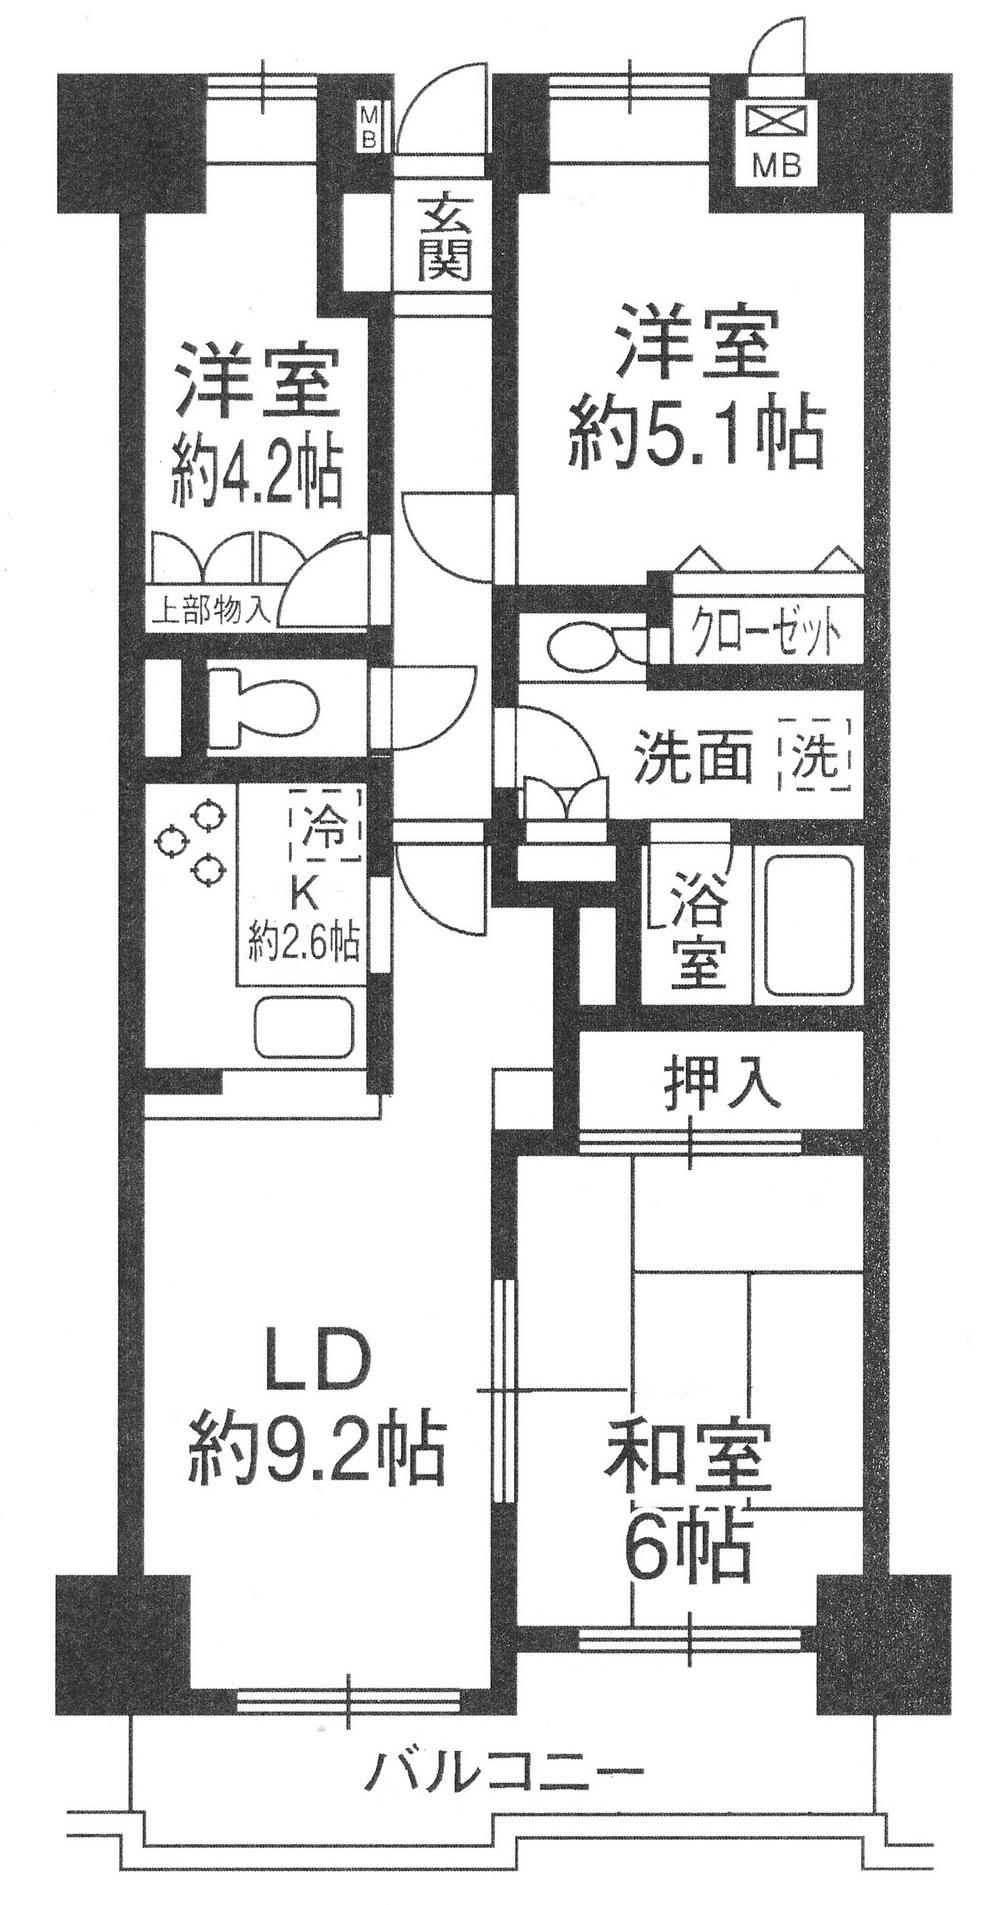 Floor plan. 3LDK, Price 13.5 million yen, Occupied area 62.45 sq m , Balcony area 7.29 sq m